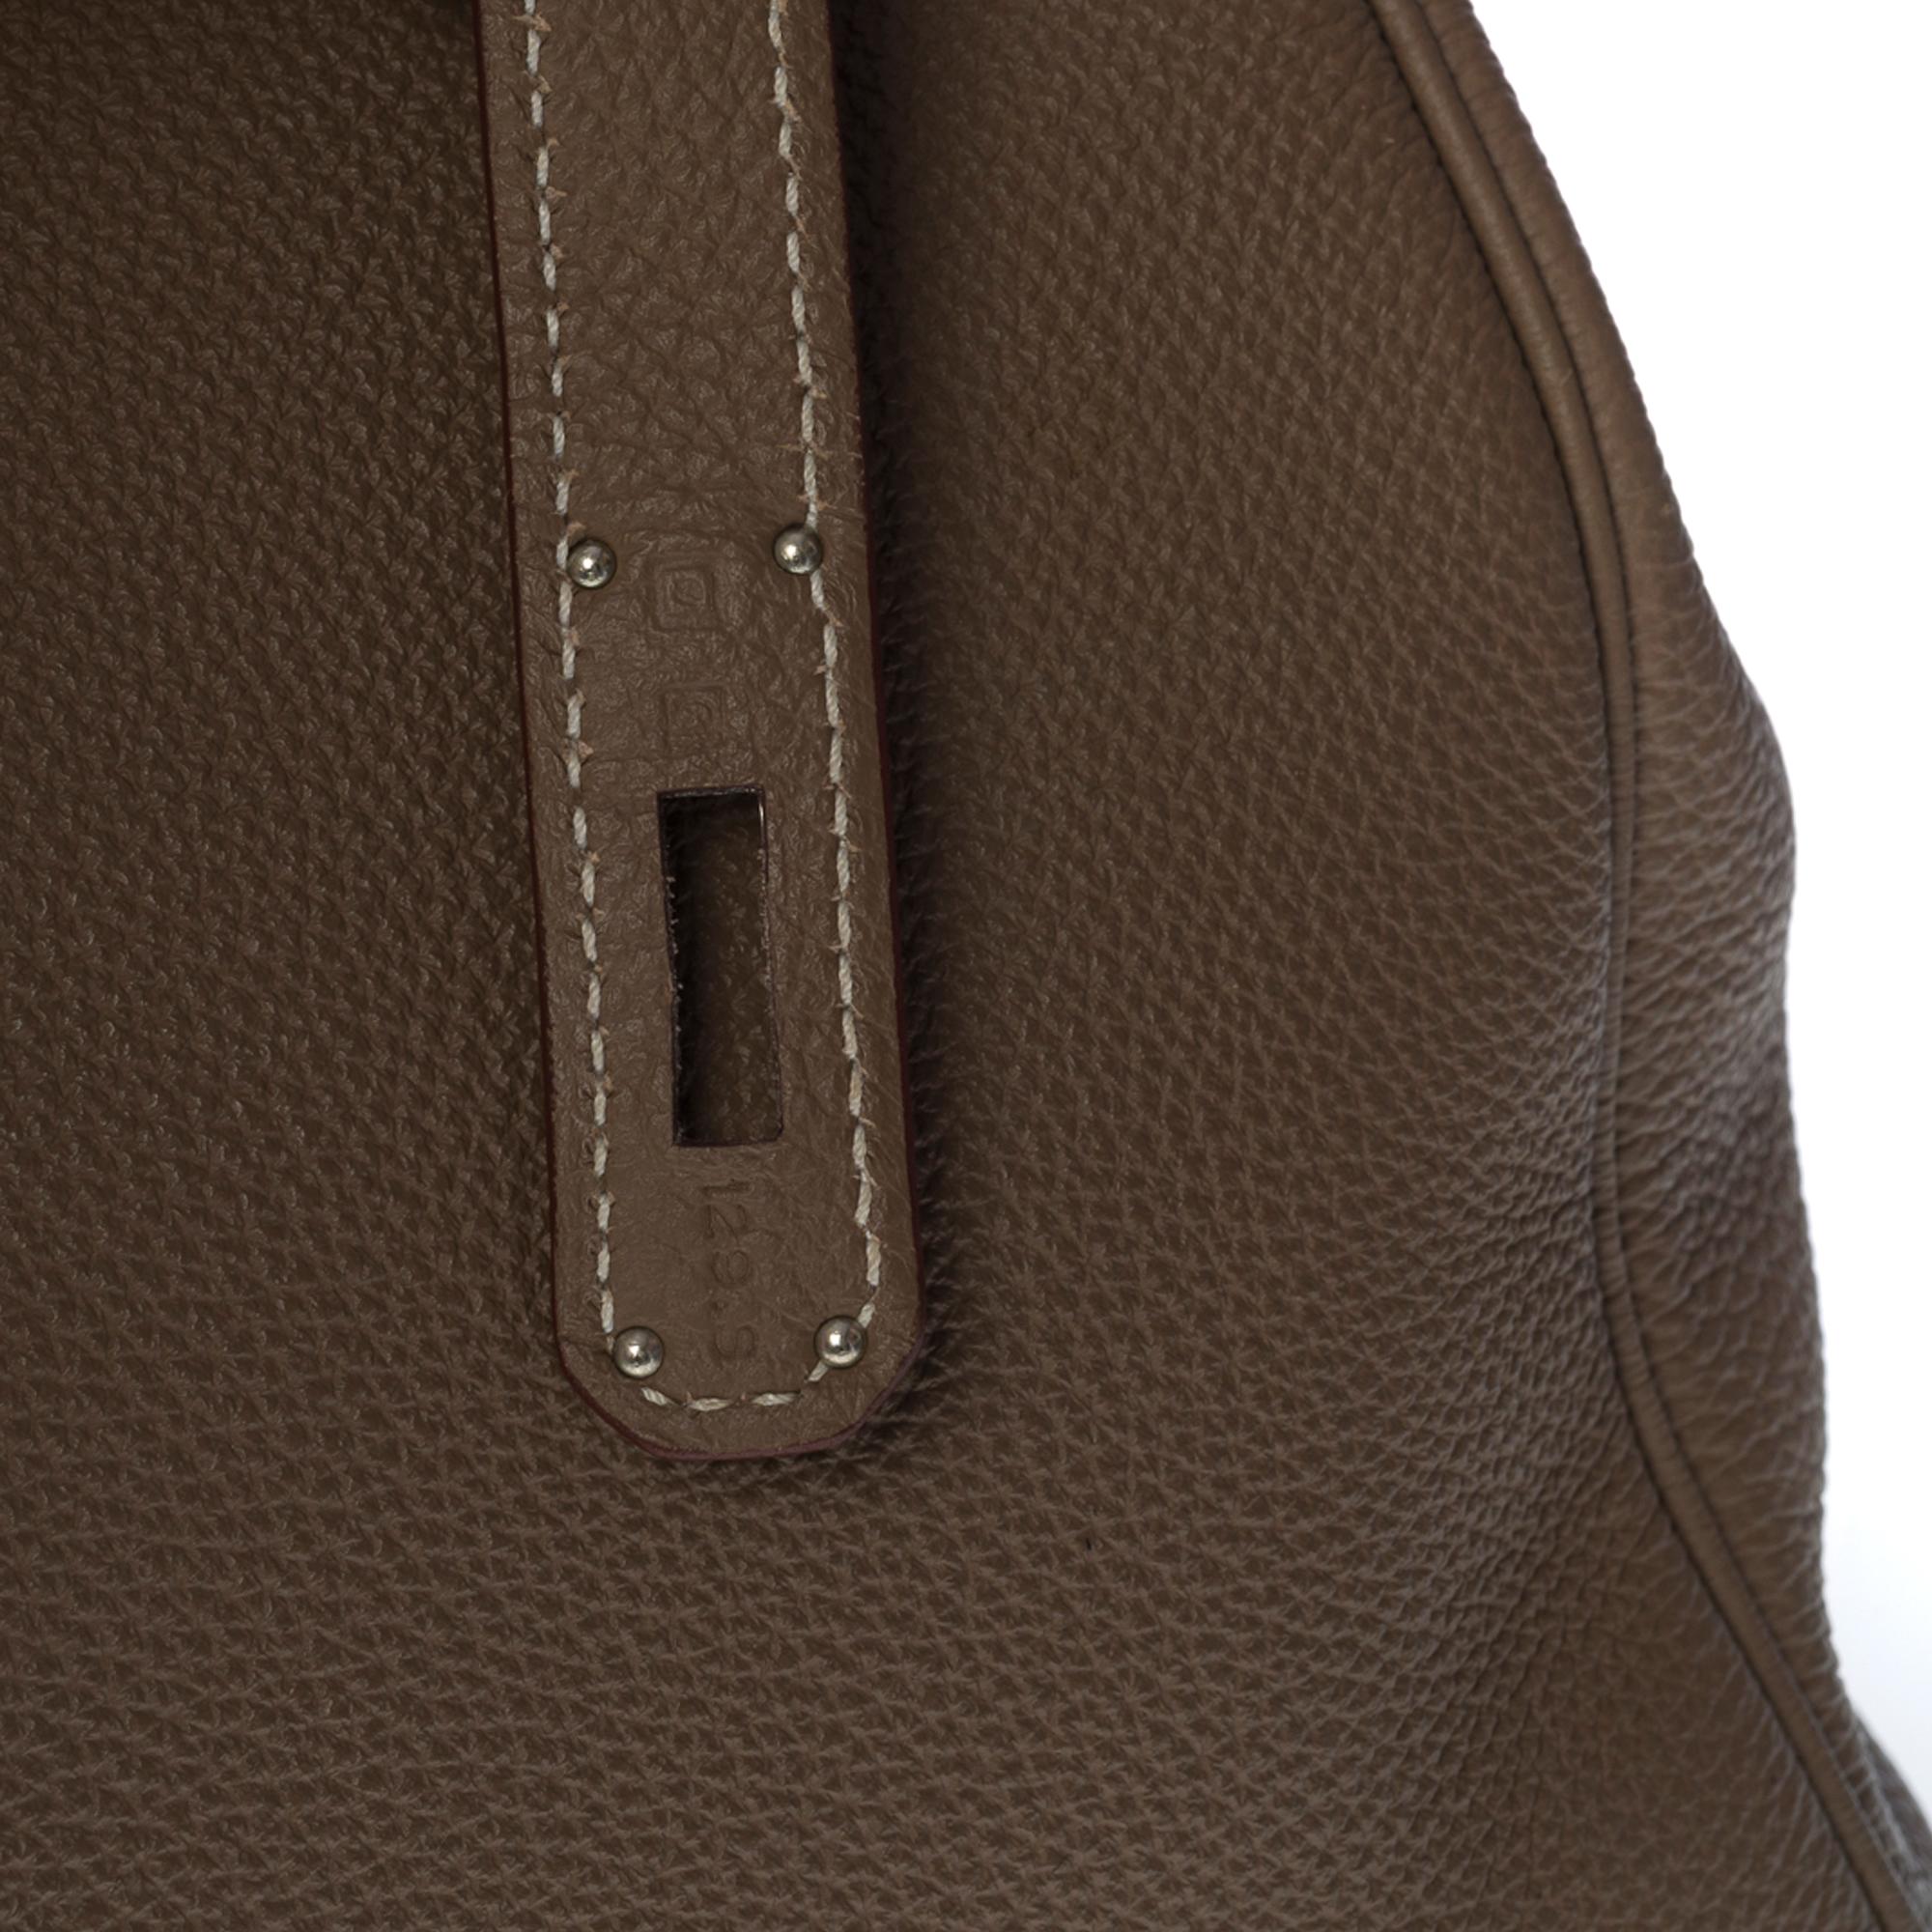 Stunning Hermès Birkin 35 handbag in etoupe Togo leather, SHW 2